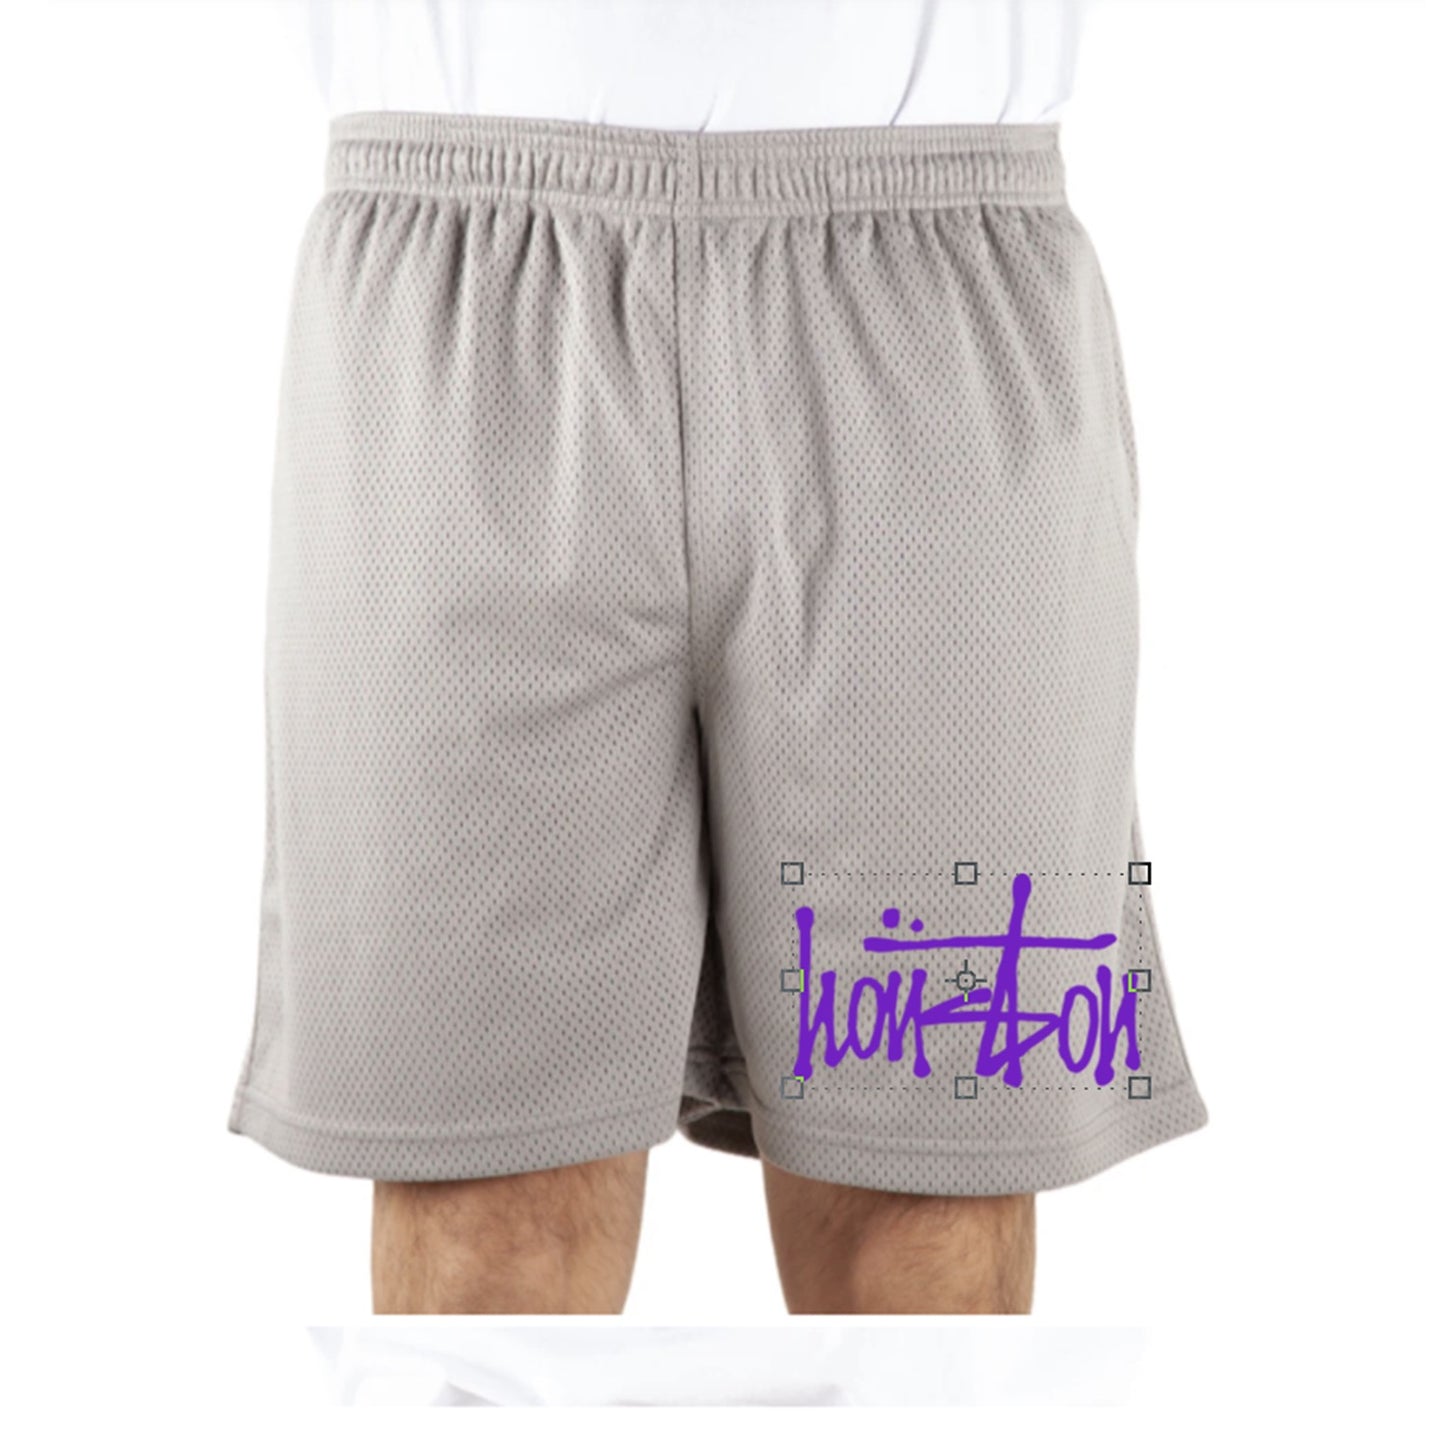 Our Houston Purple Drip Mesh Shorts